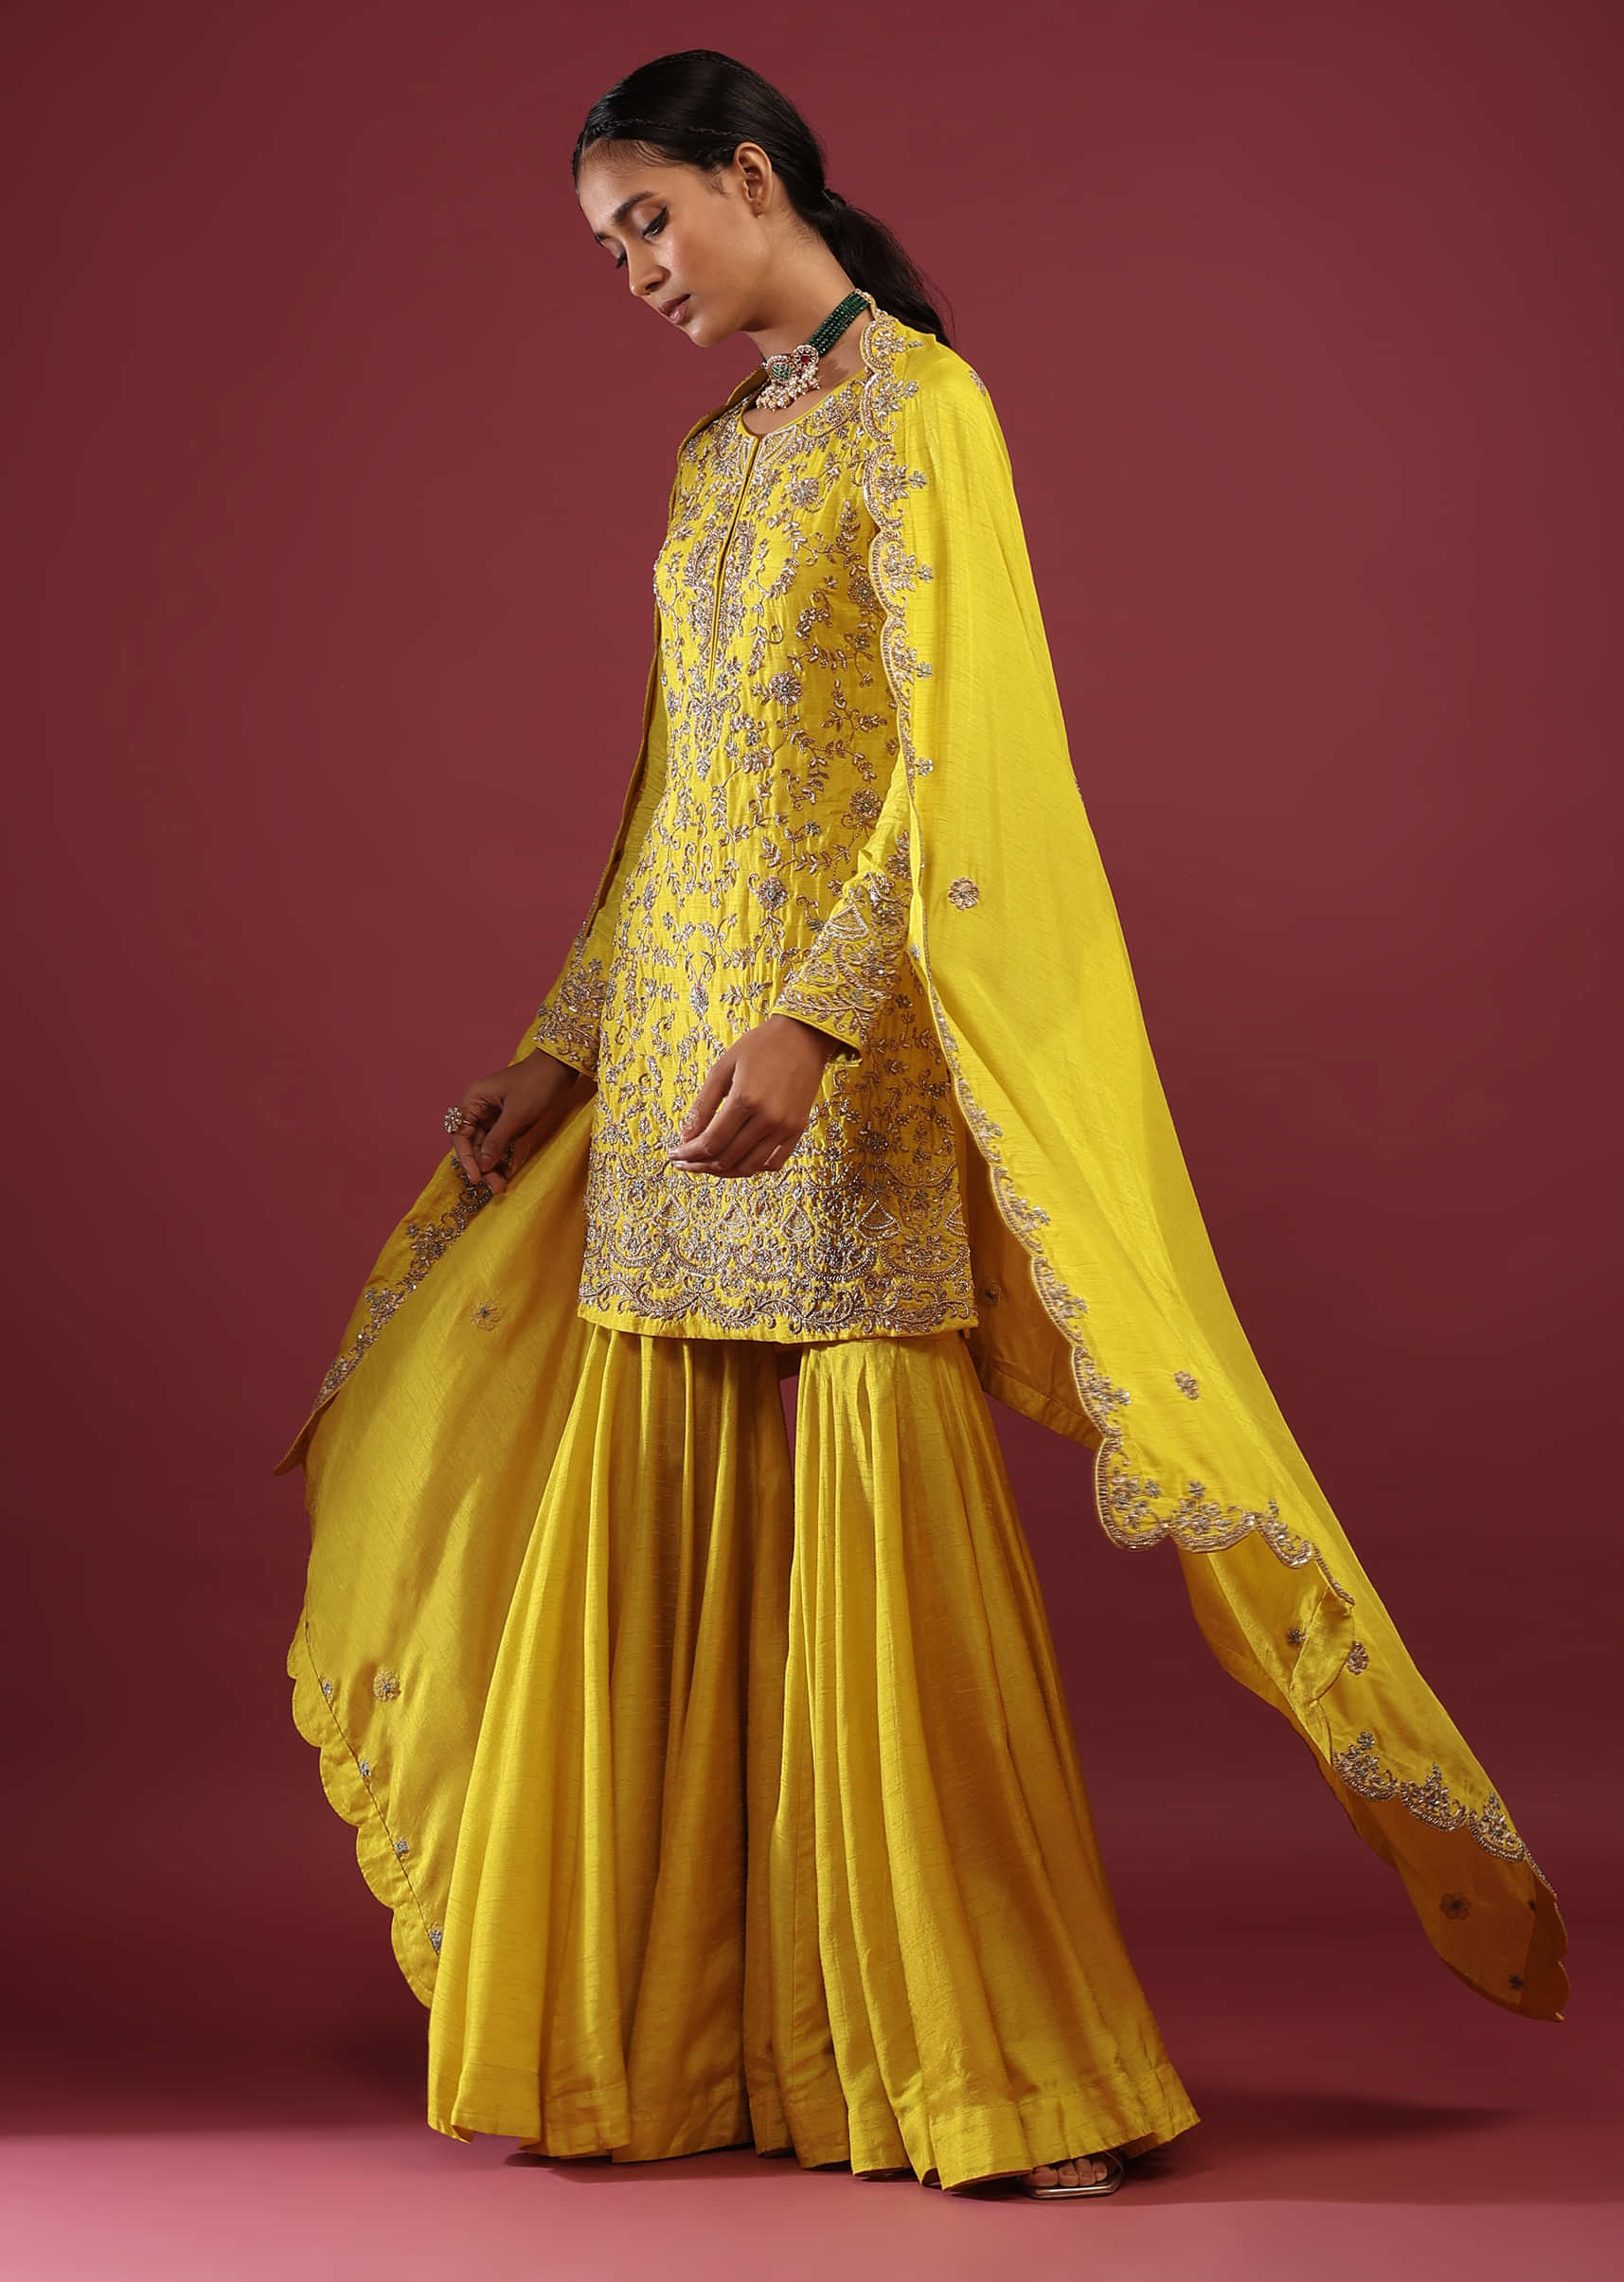 Daffodil Yellow Sharara Suit In Raw Silk With Zardosi And Moti Floral Work